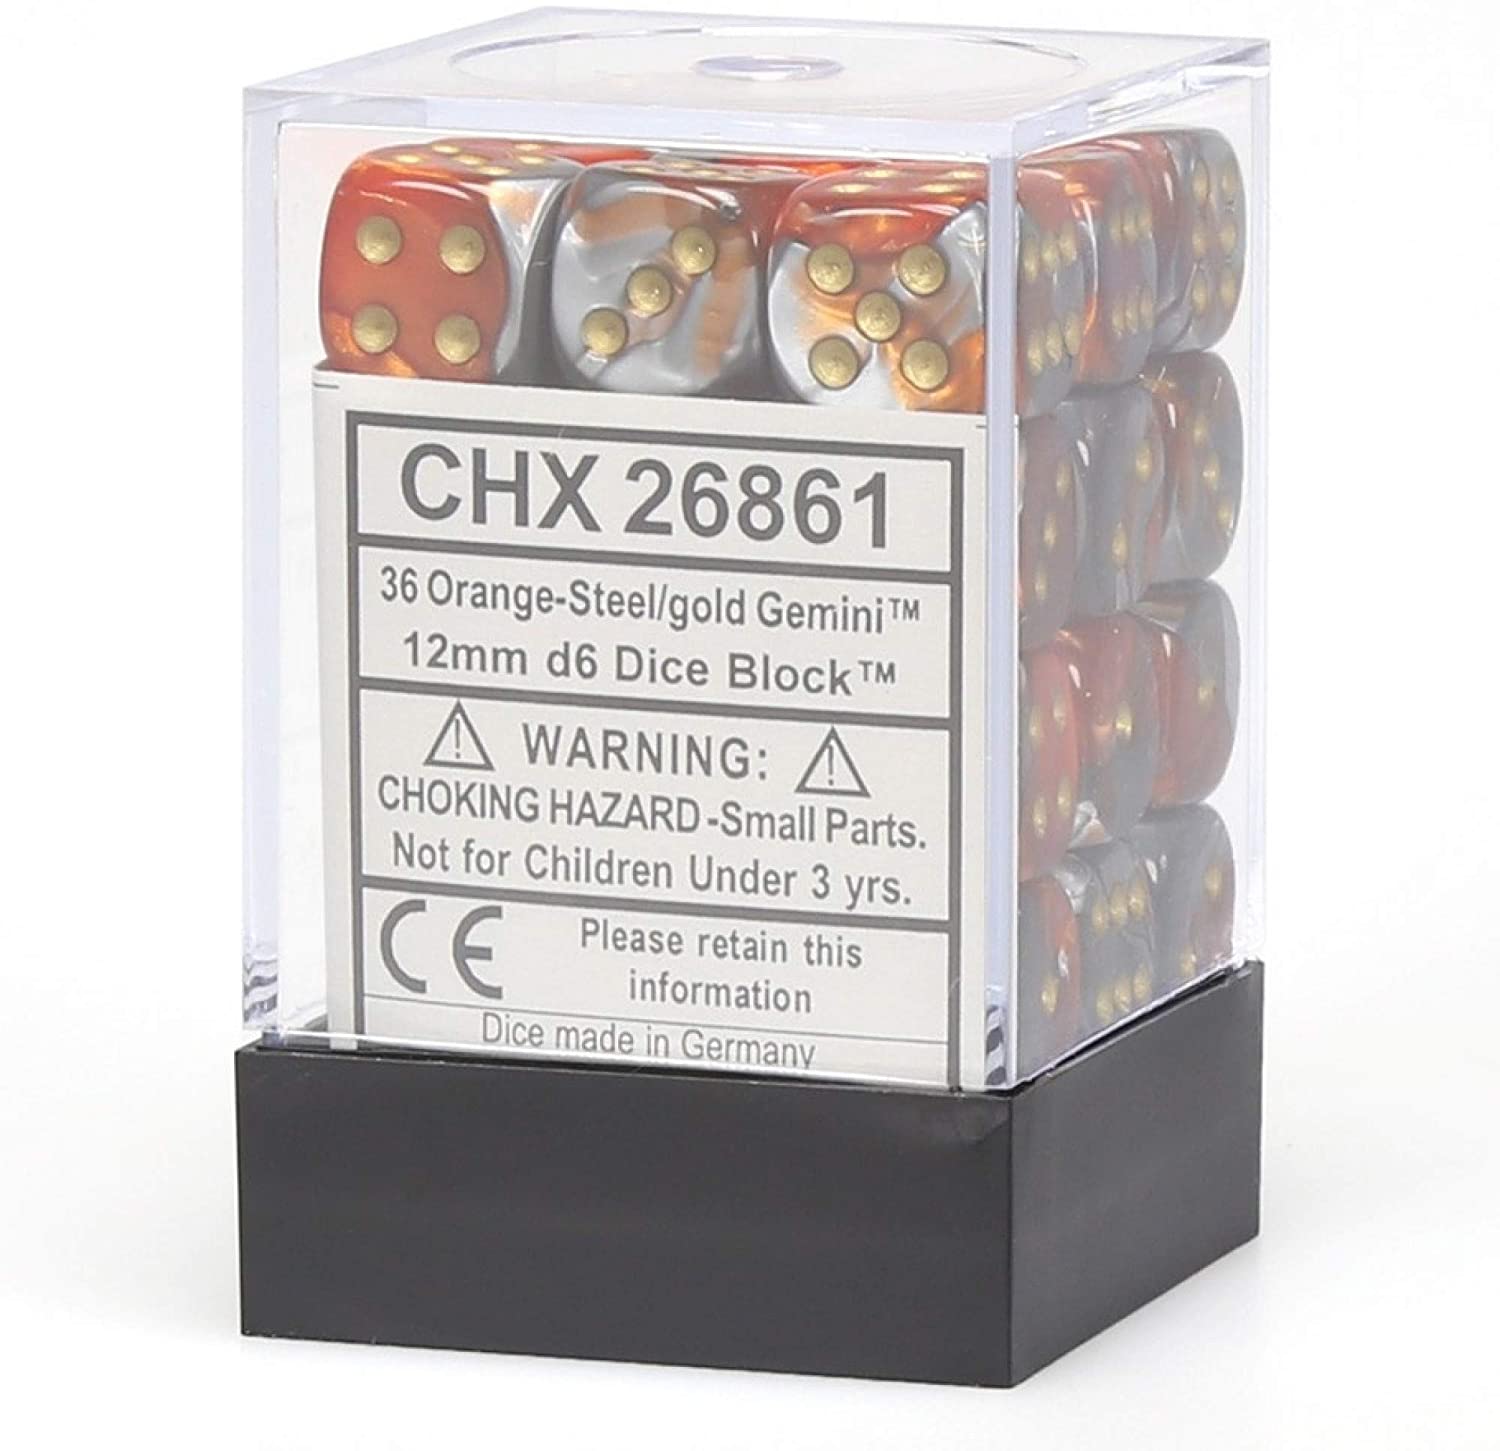 Chessex Dice: D6 Block 12mm - Gemini - Orange Steel with Gold (CHX 26861) - Gamescape